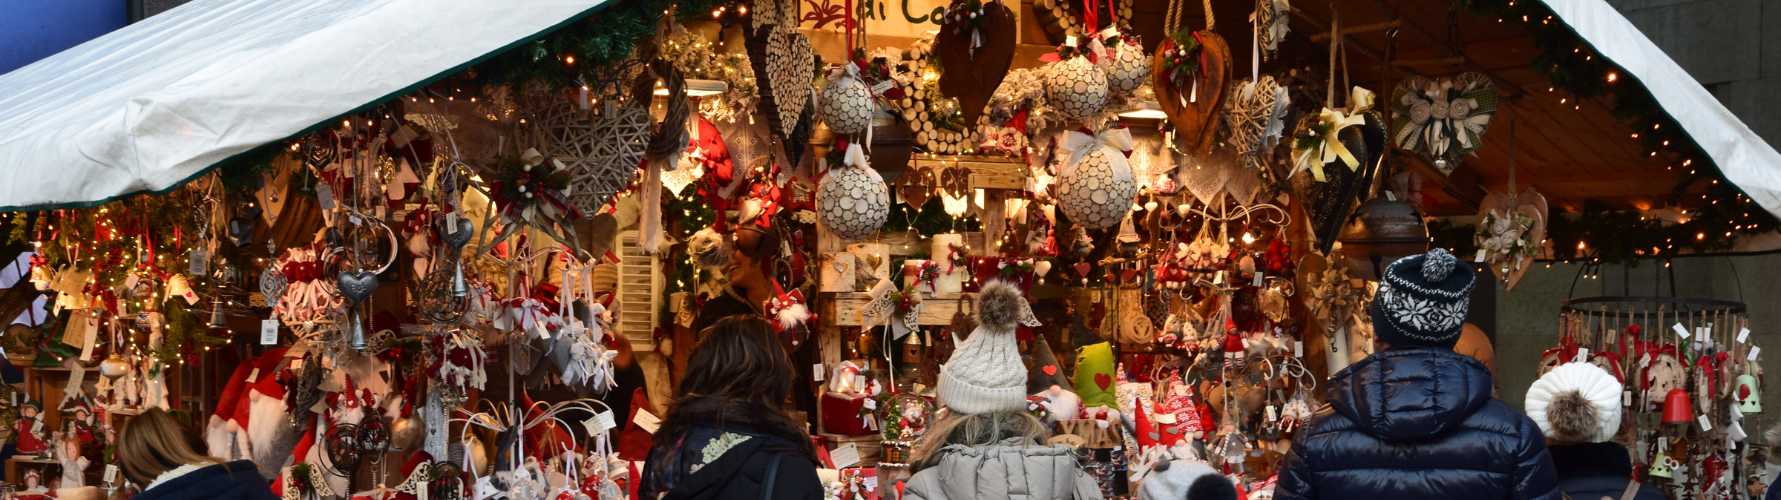 mercats ambulants nadalencs